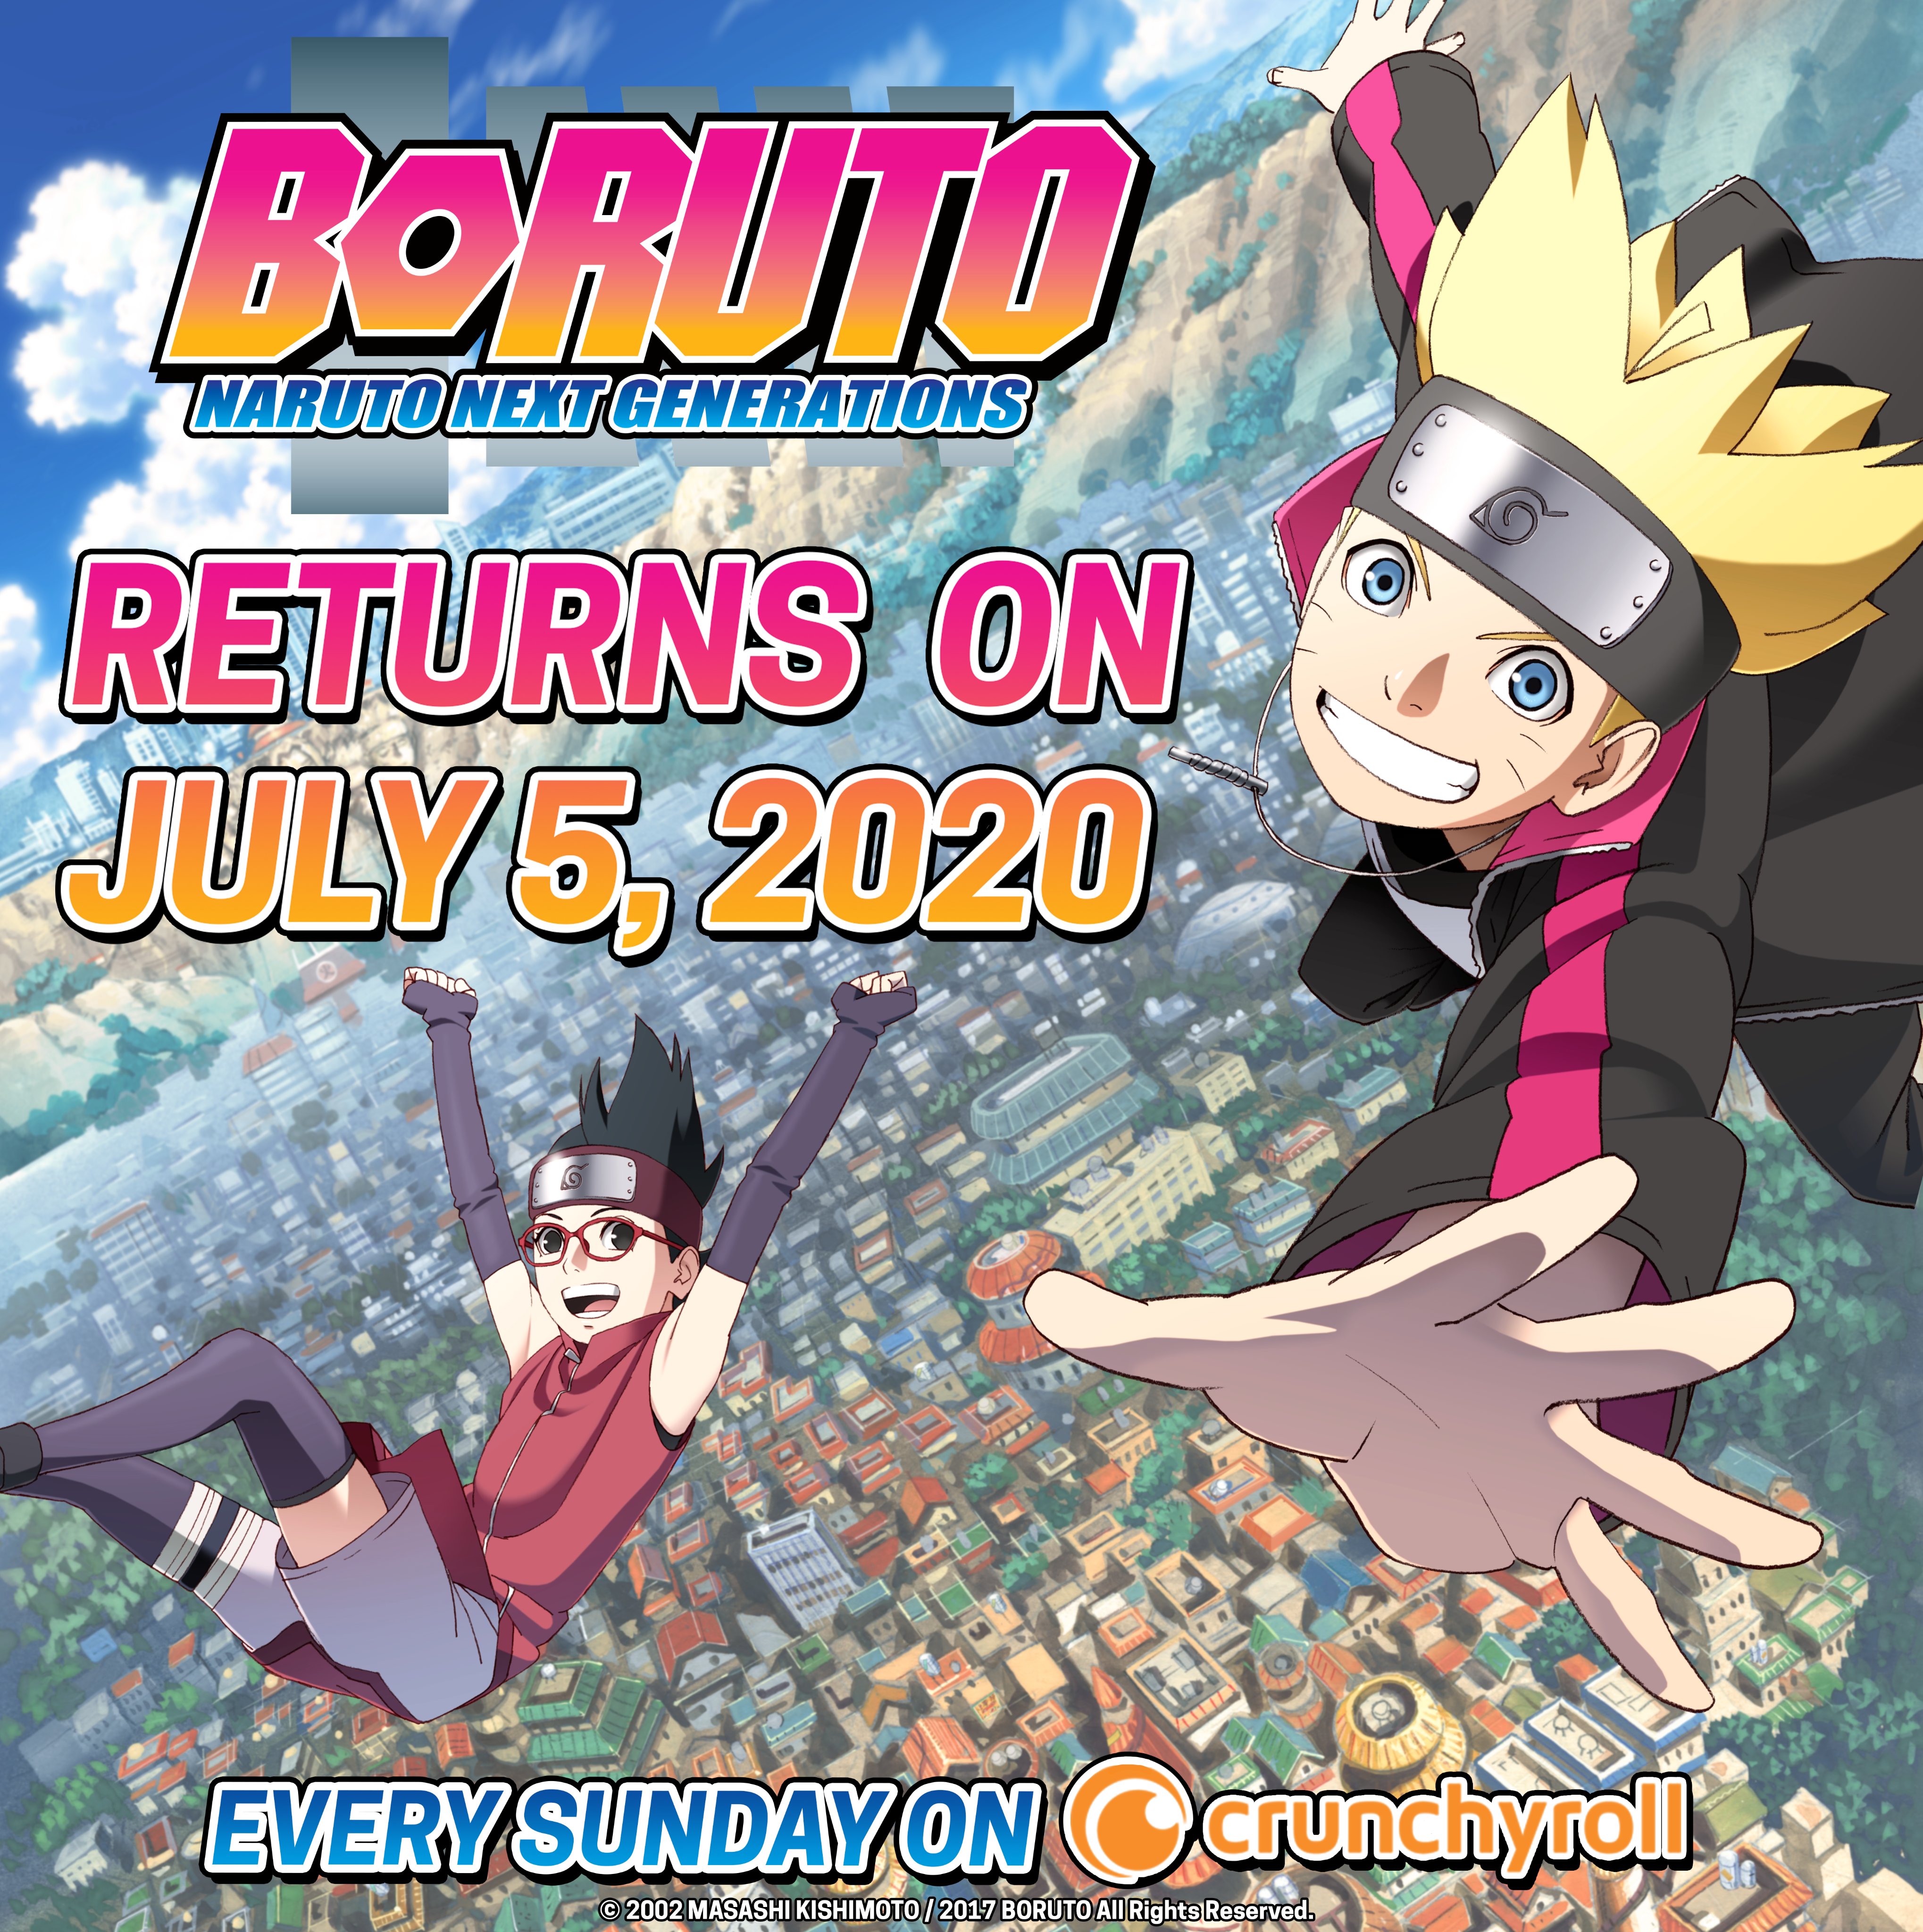 Crunchyroll - New Visual for BORUTO: NARUTO NEXT GENERATIONS